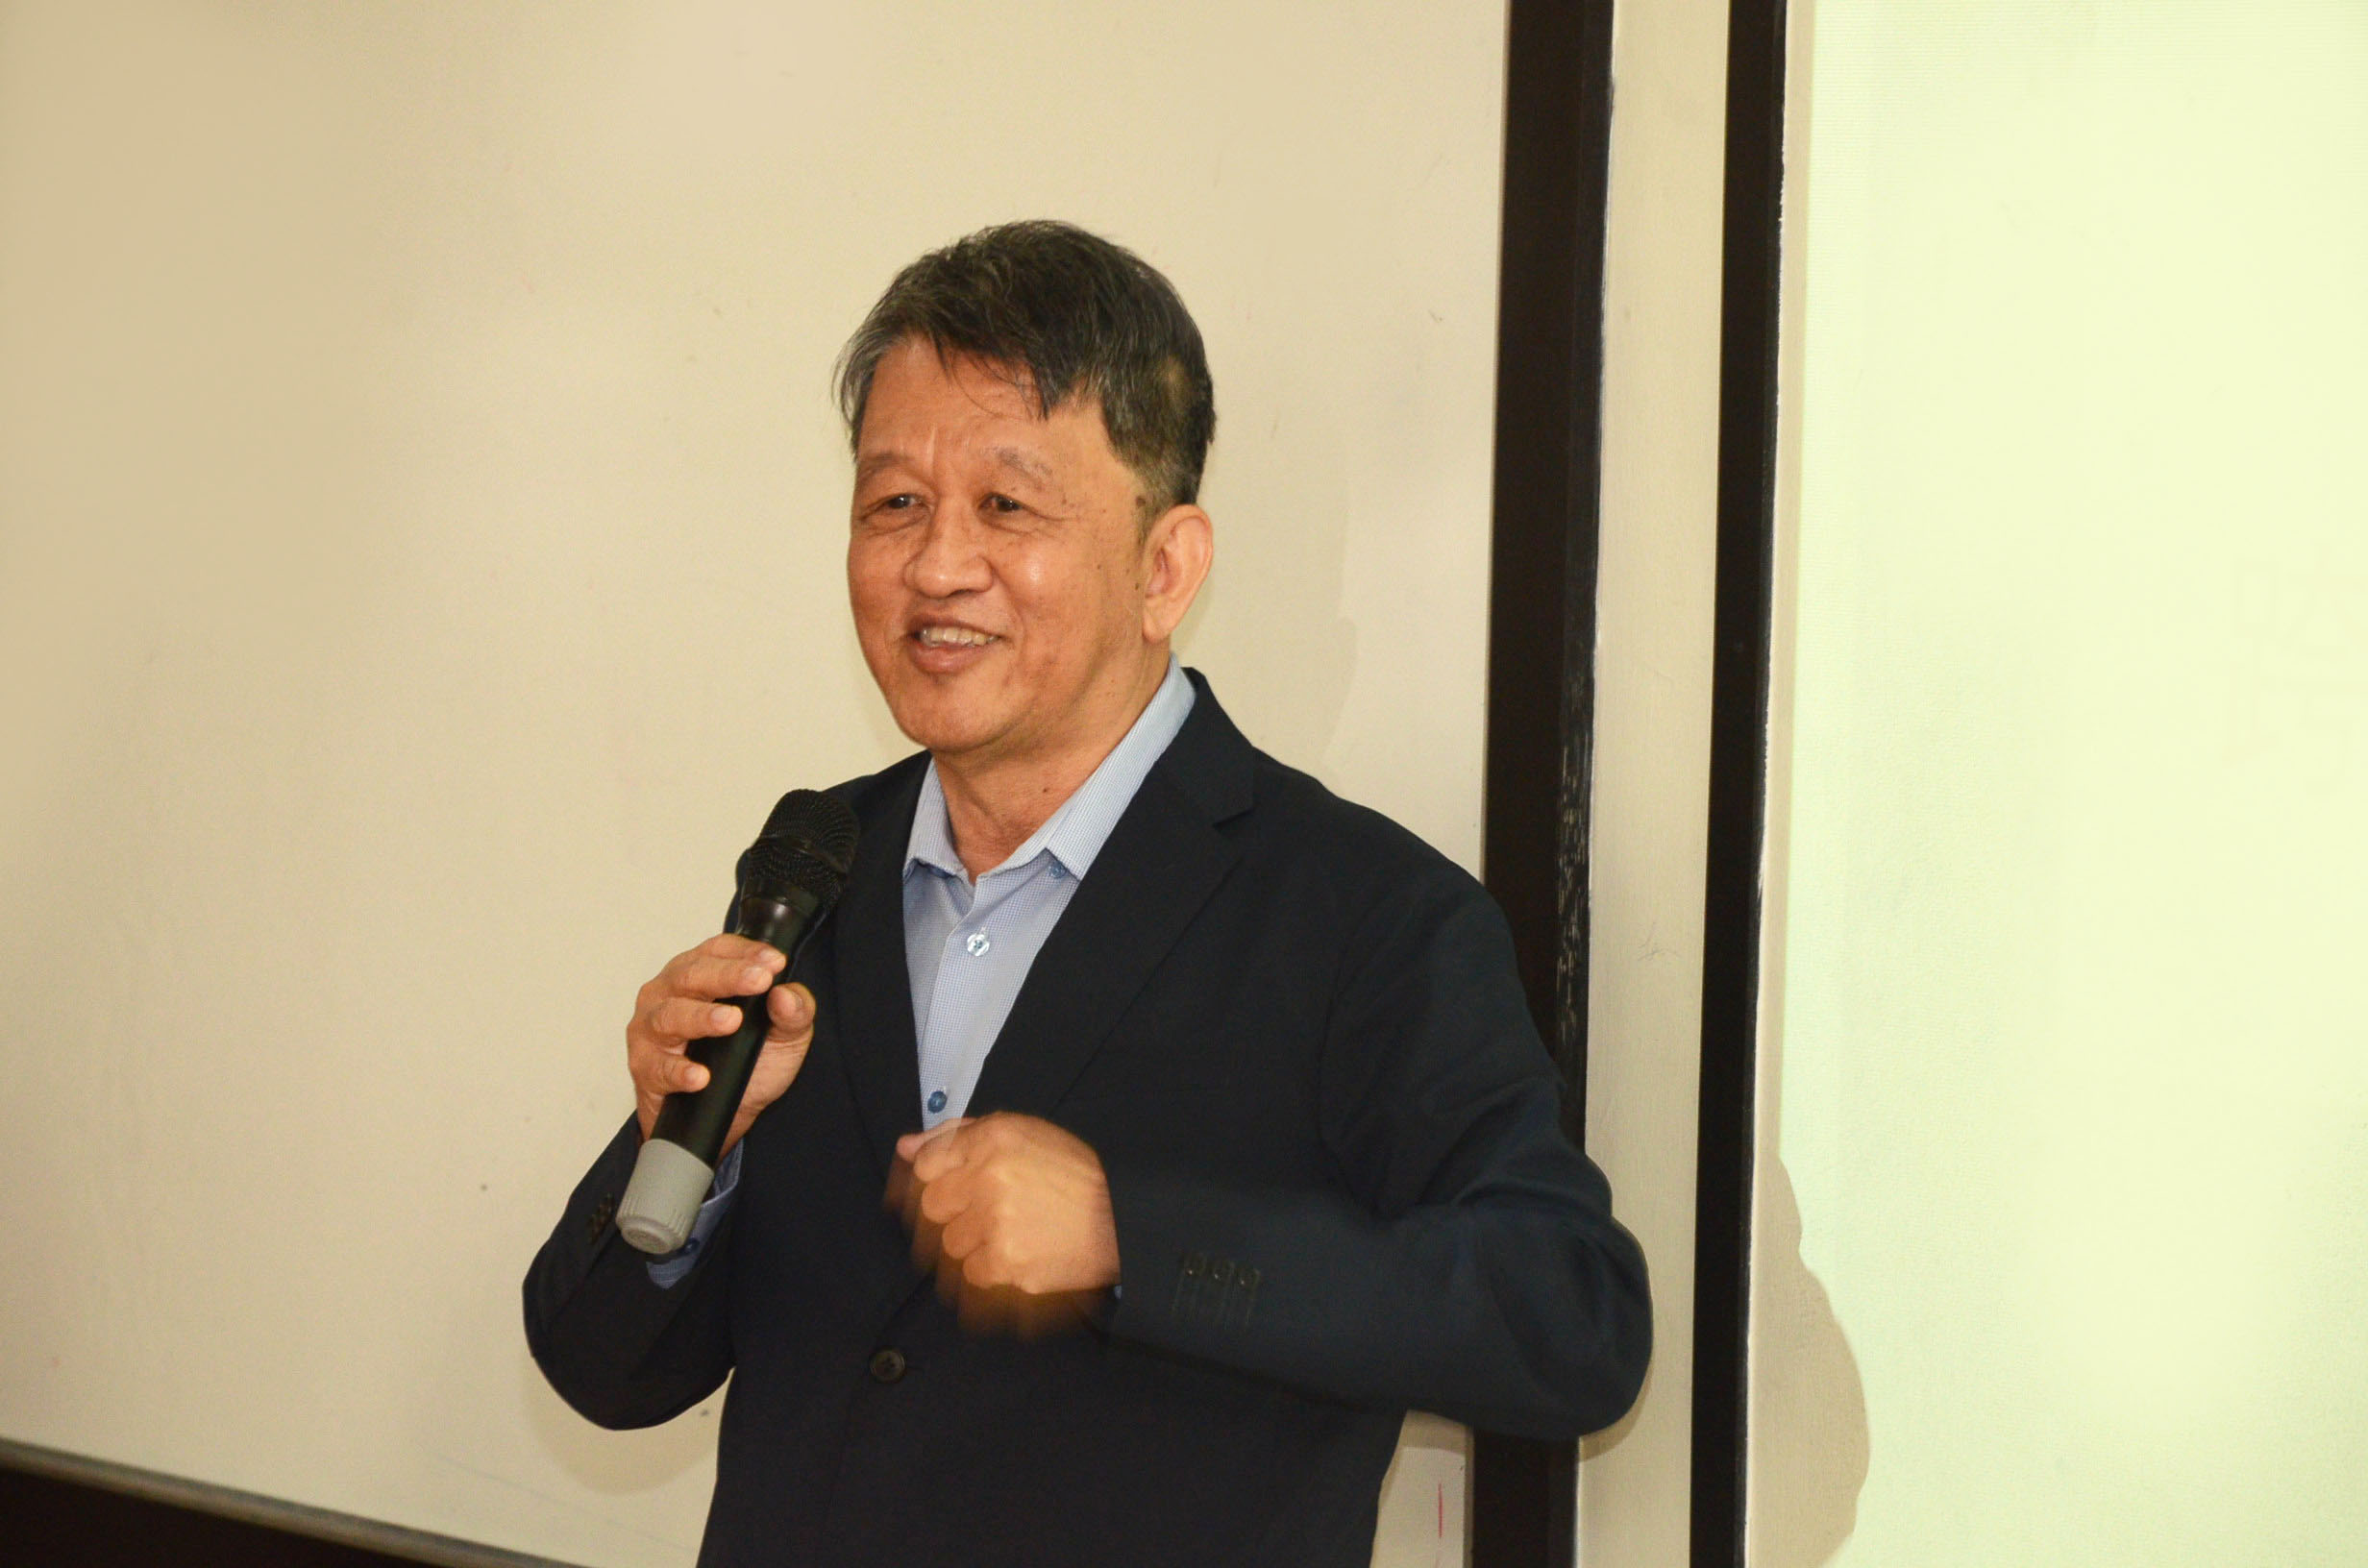 Khor Ewe Pin delivering his talk